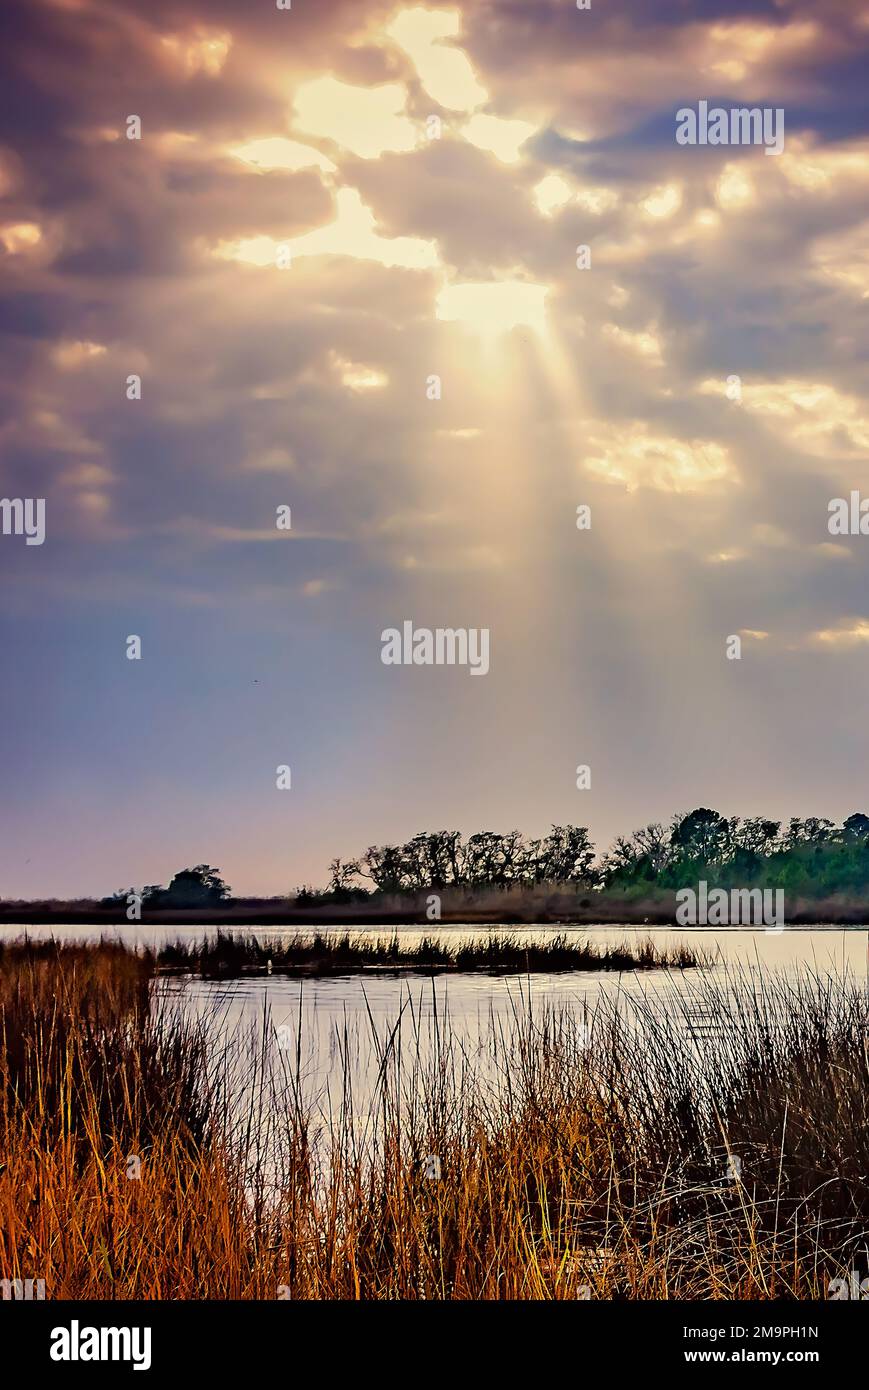 The sun sets over marsh grass, Jan. 17, 2023, in Bayou La Batre, Alabama. Coastal wetlands in the area serve as an ecologically important habitat. Stock Photo